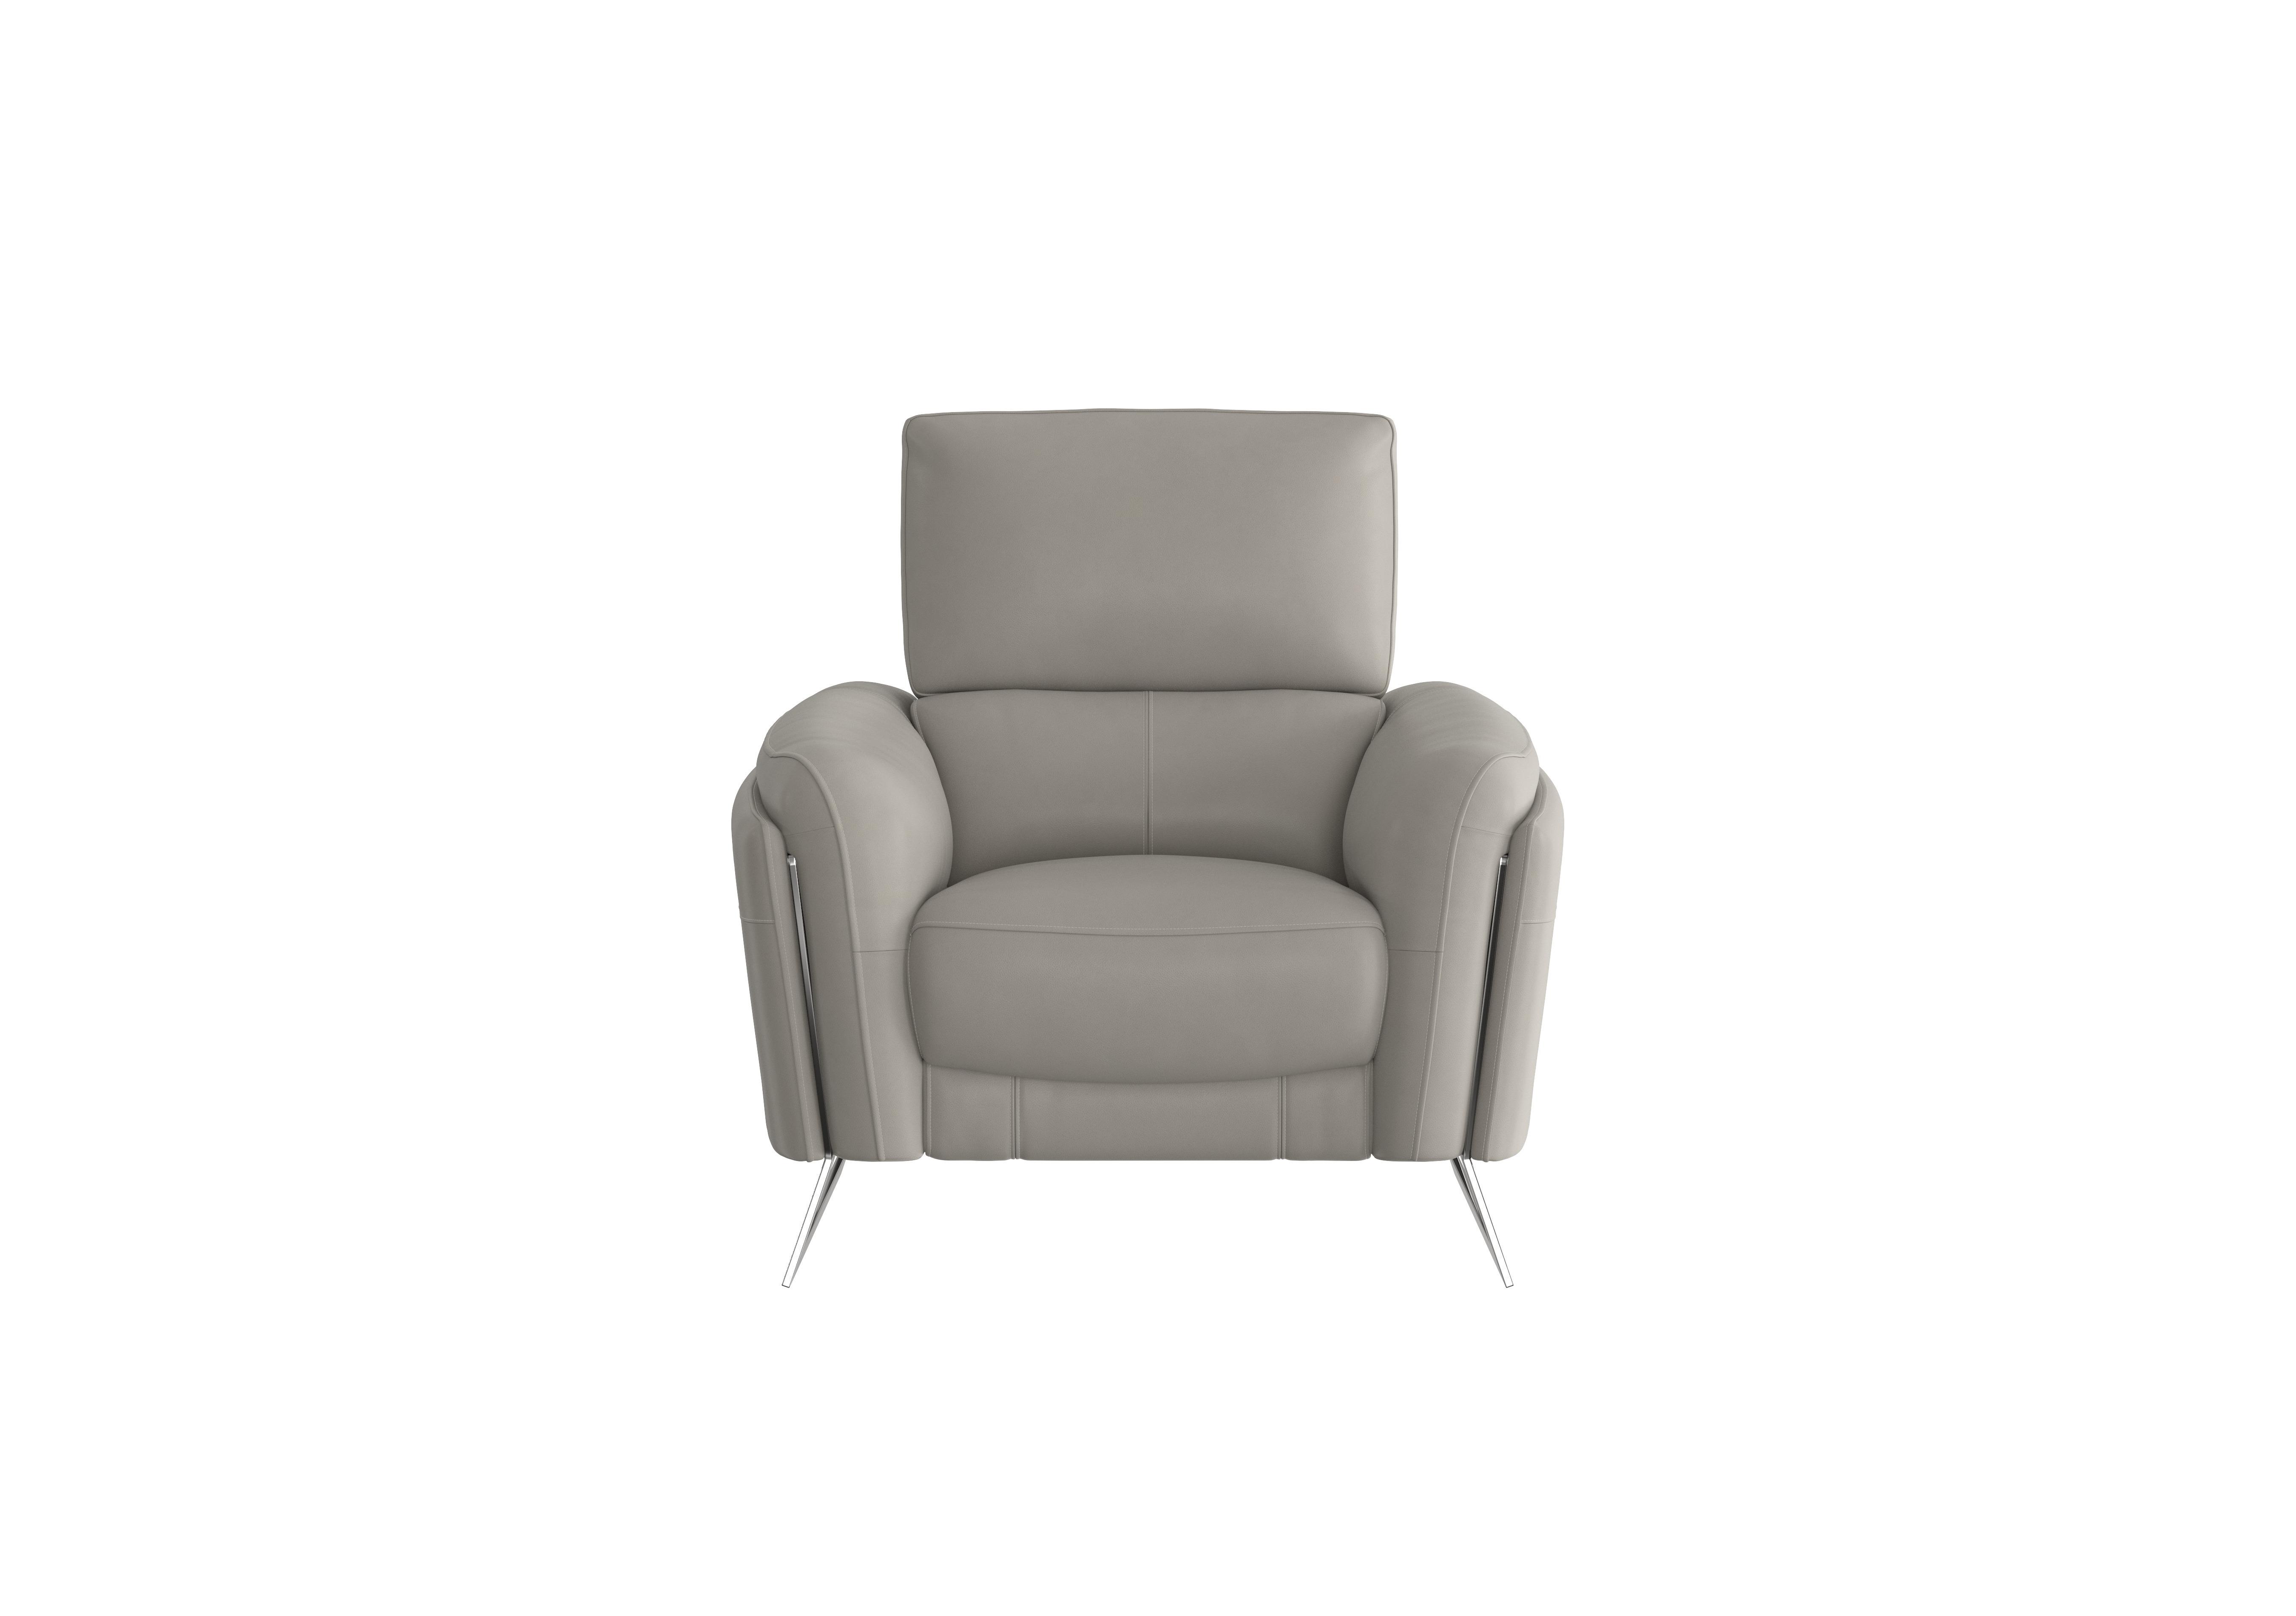 Amarilla Leather Armchair in Bv-946b Silver Grey on Furniture Village